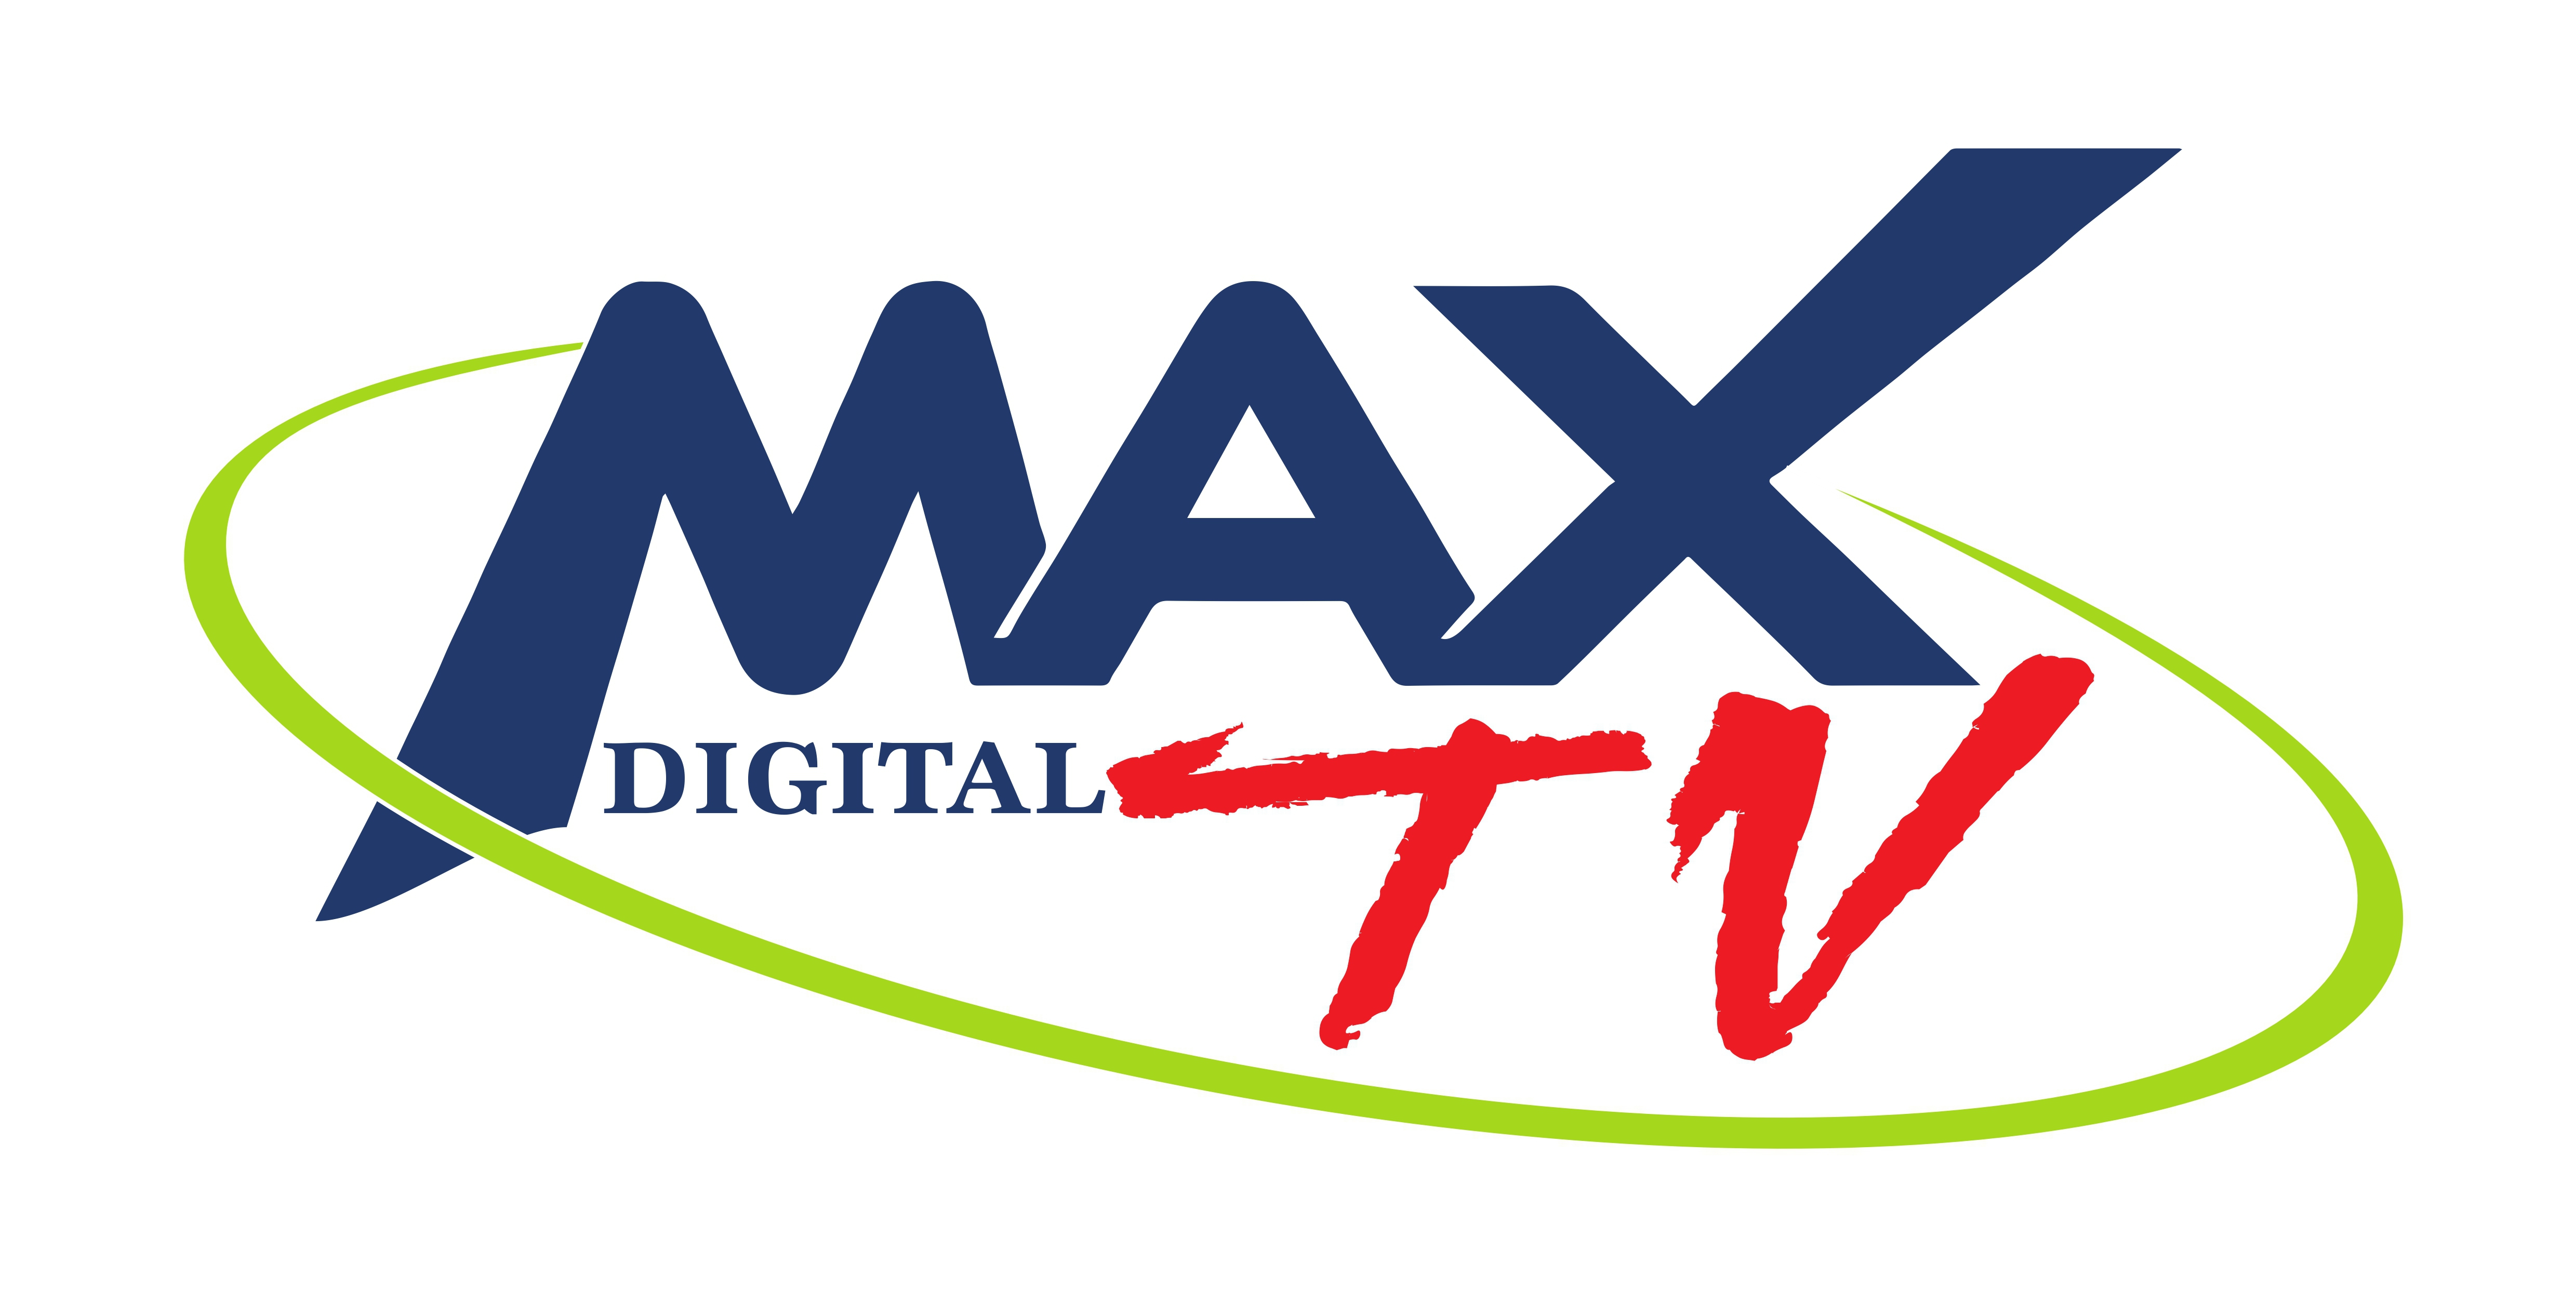 Max Digital TV